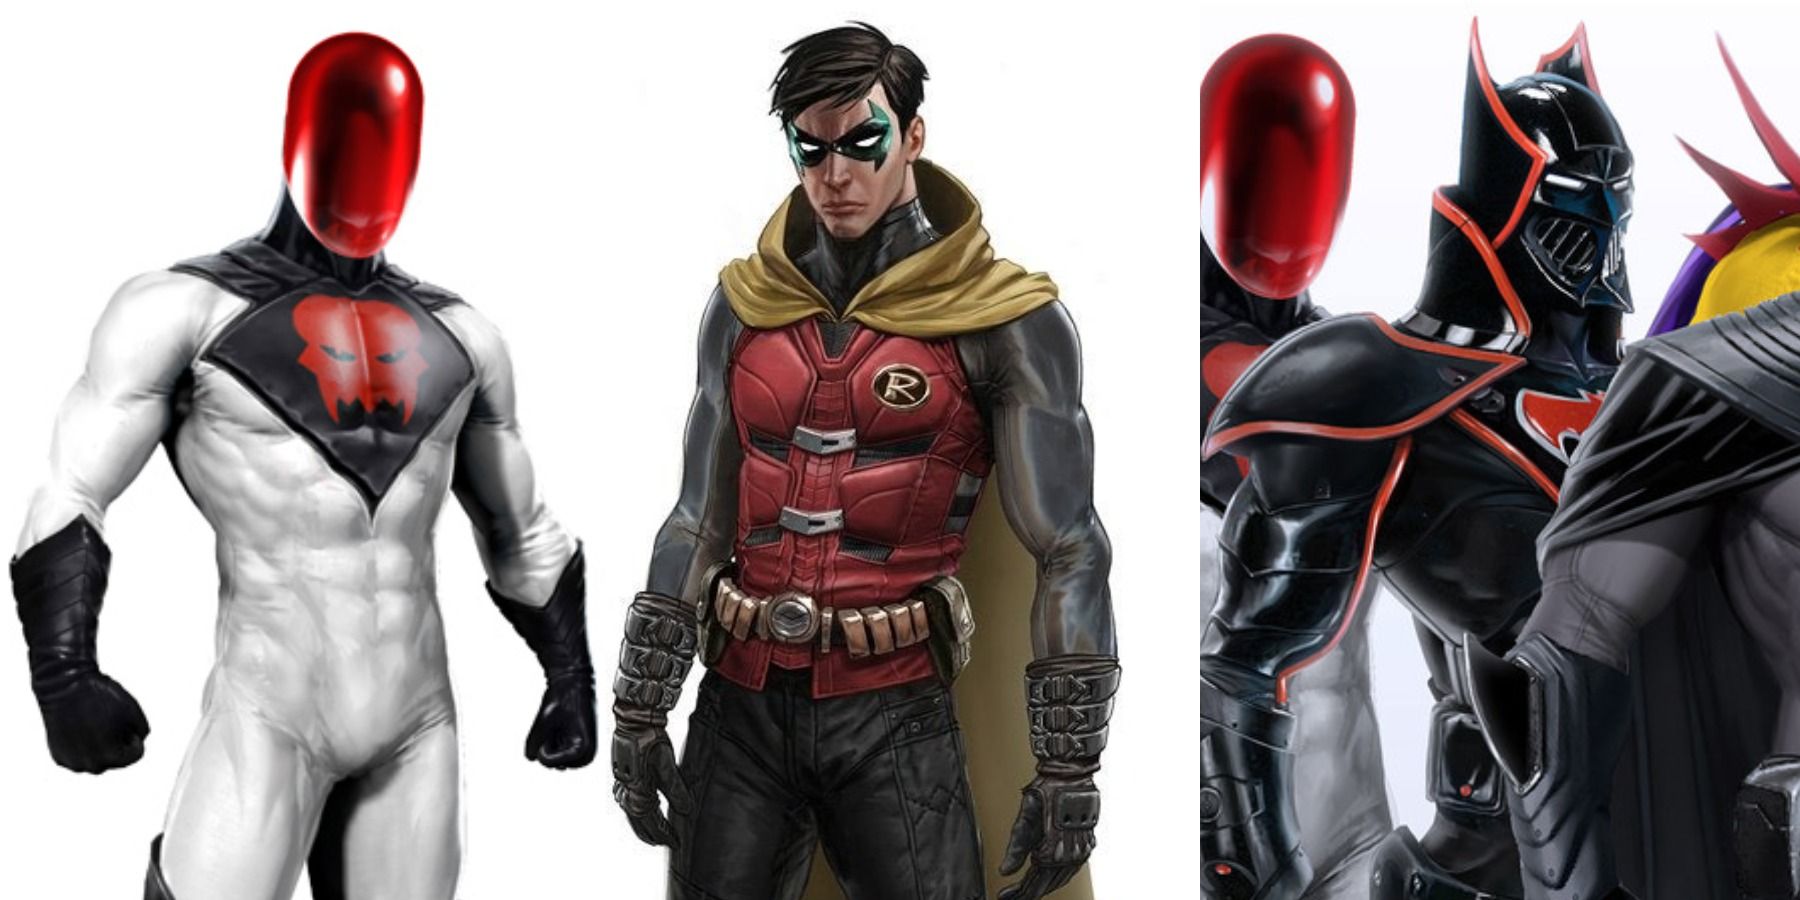 Split image of concept art for Grant Morrison Red Hood skin, Damian Wayne Robin, and Alex Ross Batman skins in Batman Arkham Knight